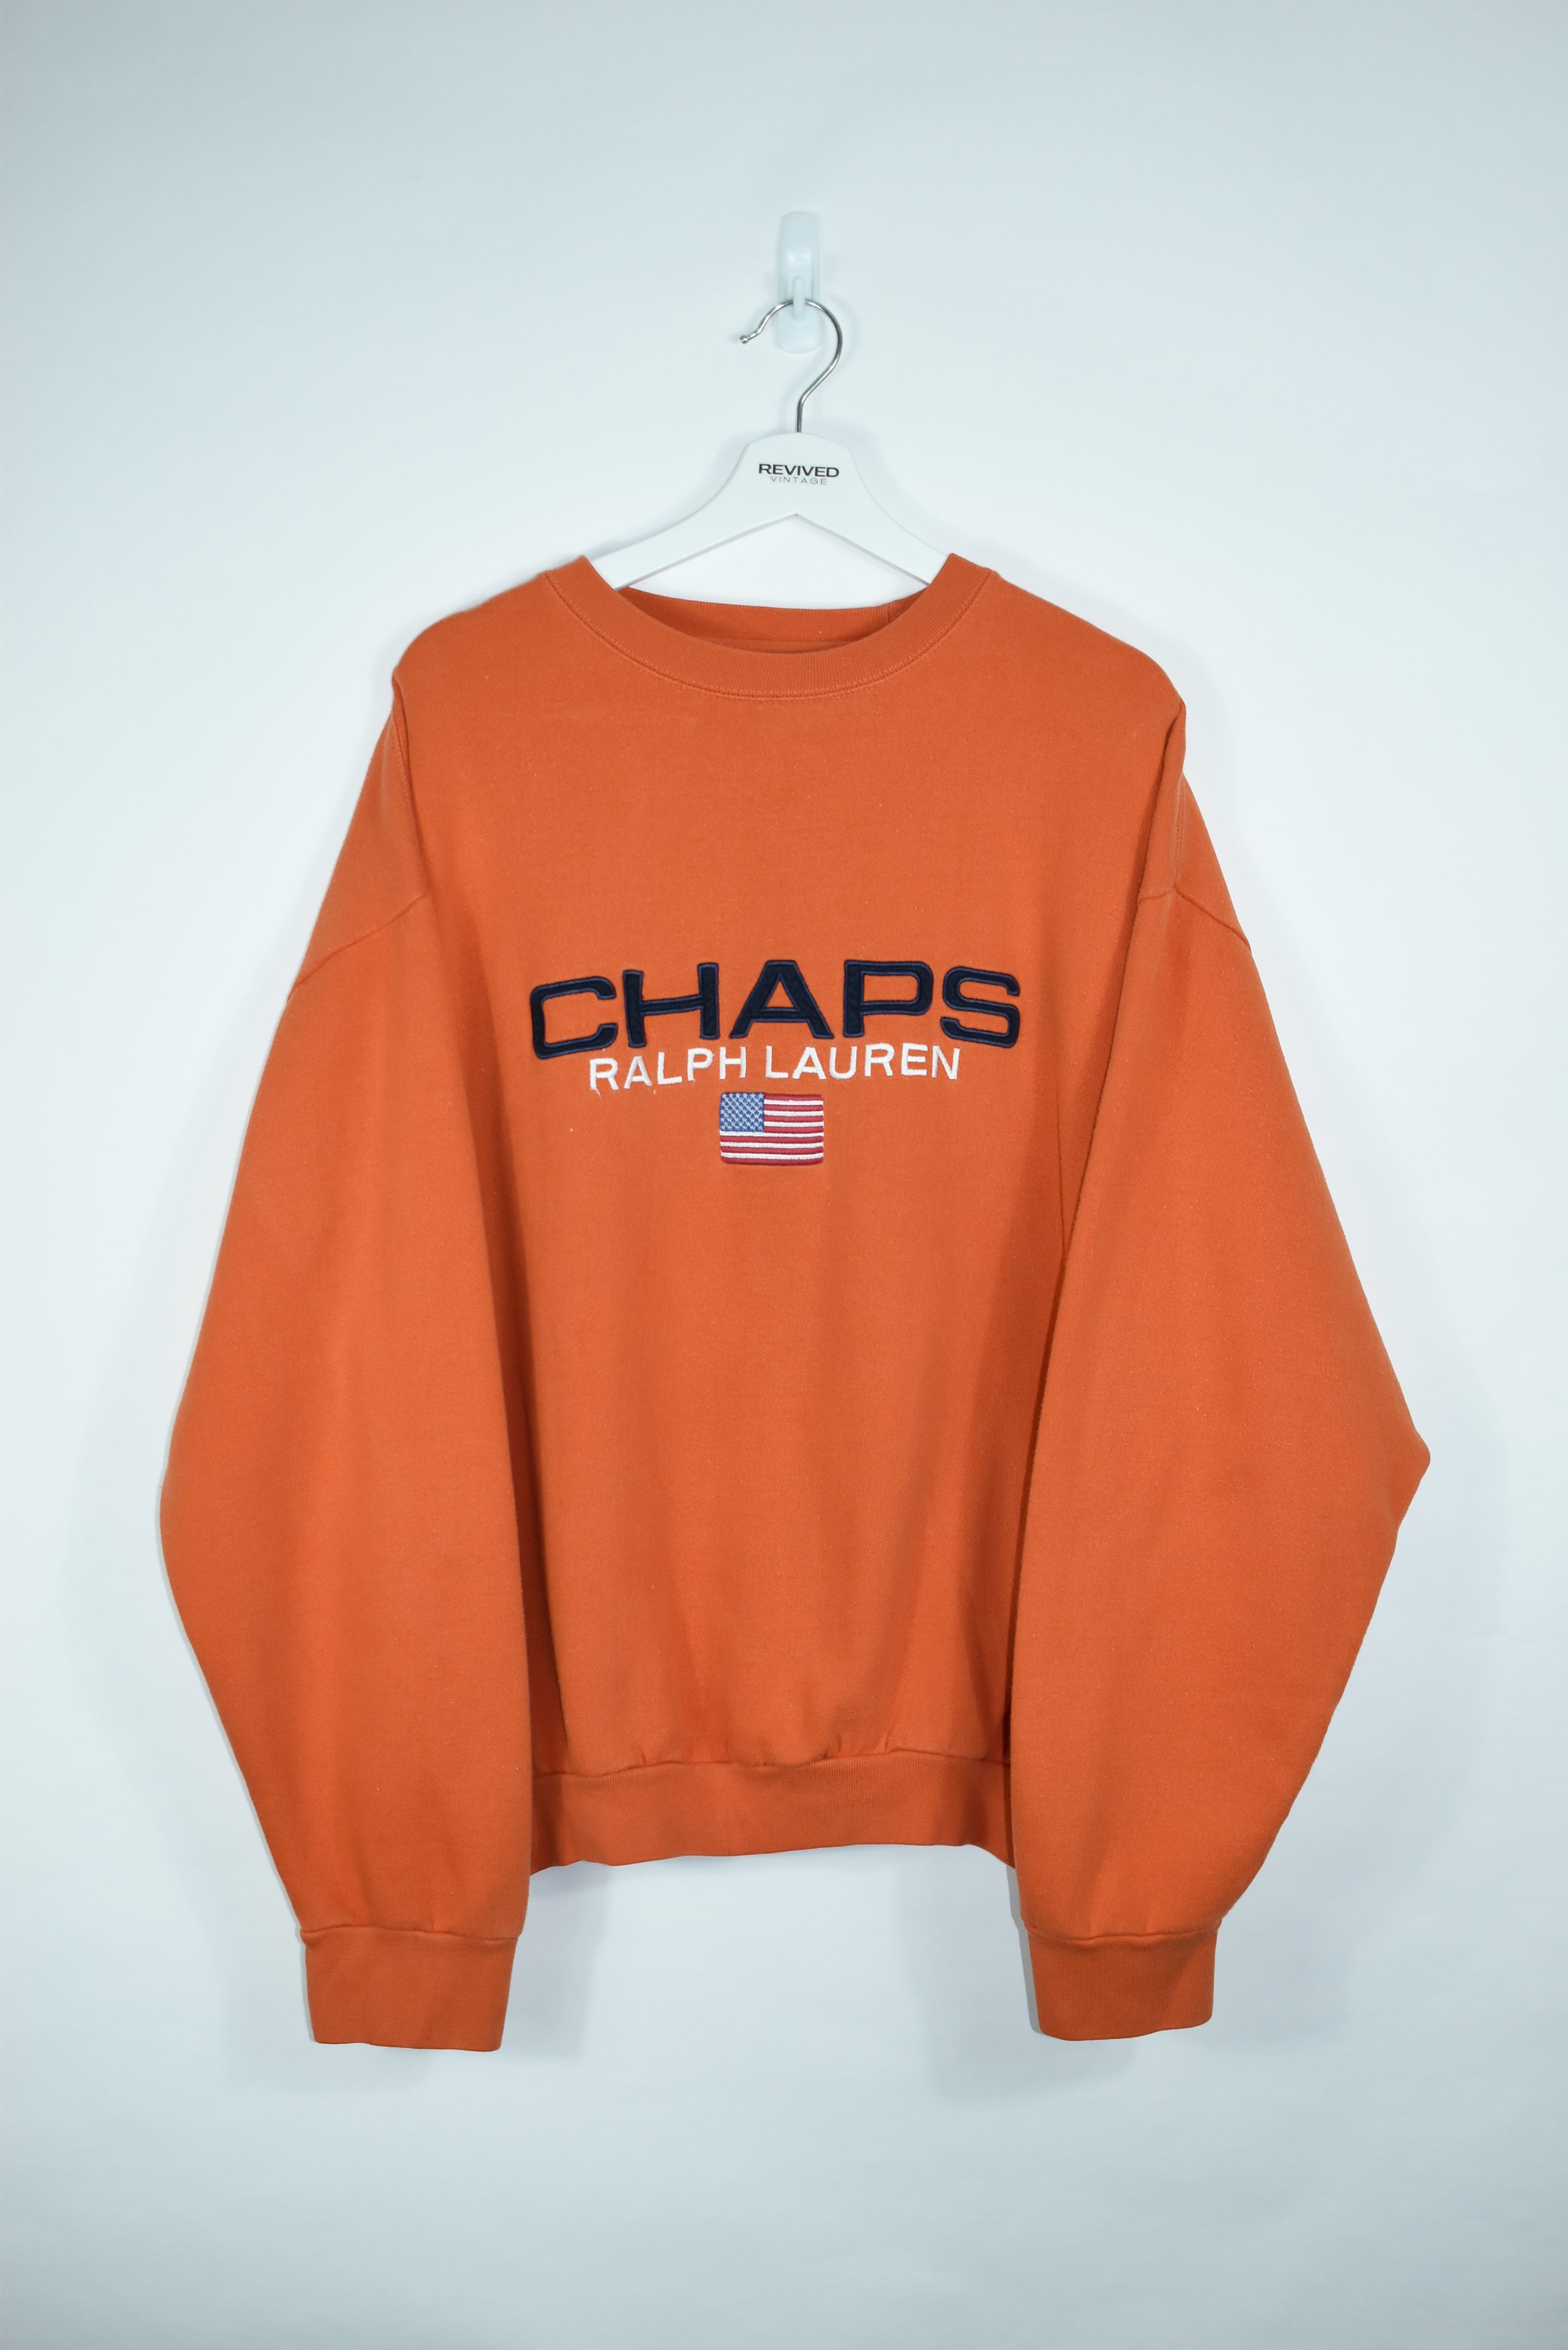 Vintage Chaps Ralph Lauren Embroidery Sweatshirt Xlarge